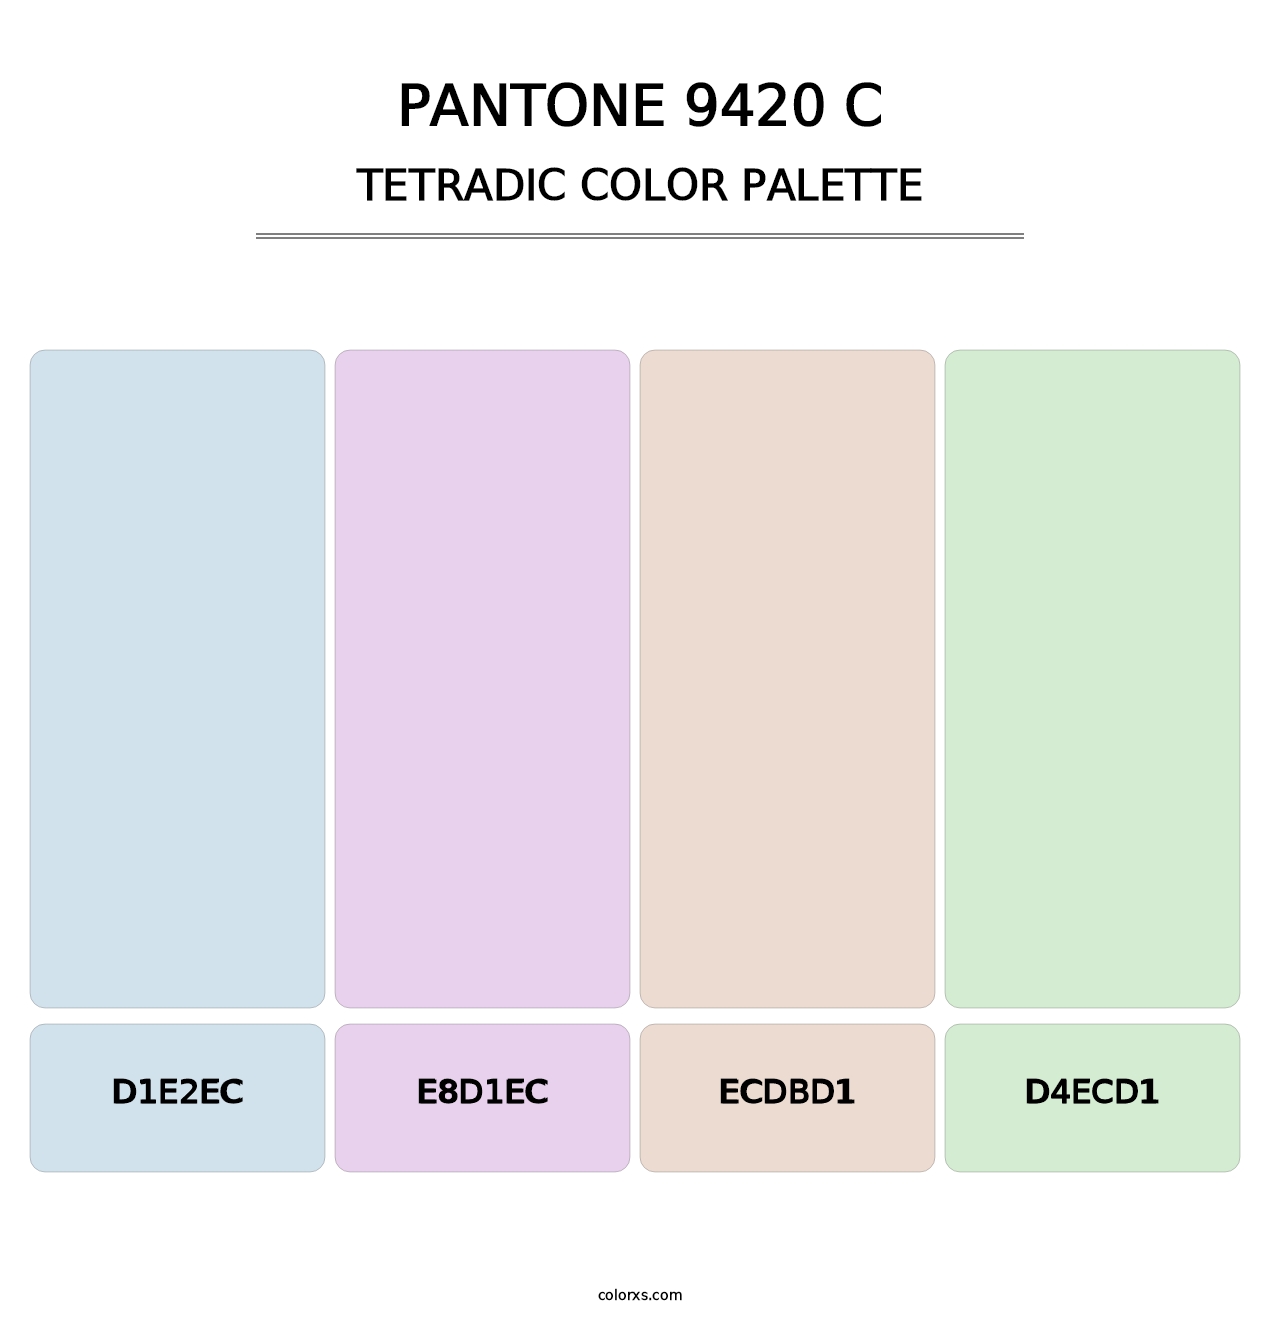 PANTONE 9420 C - Tetradic Color Palette